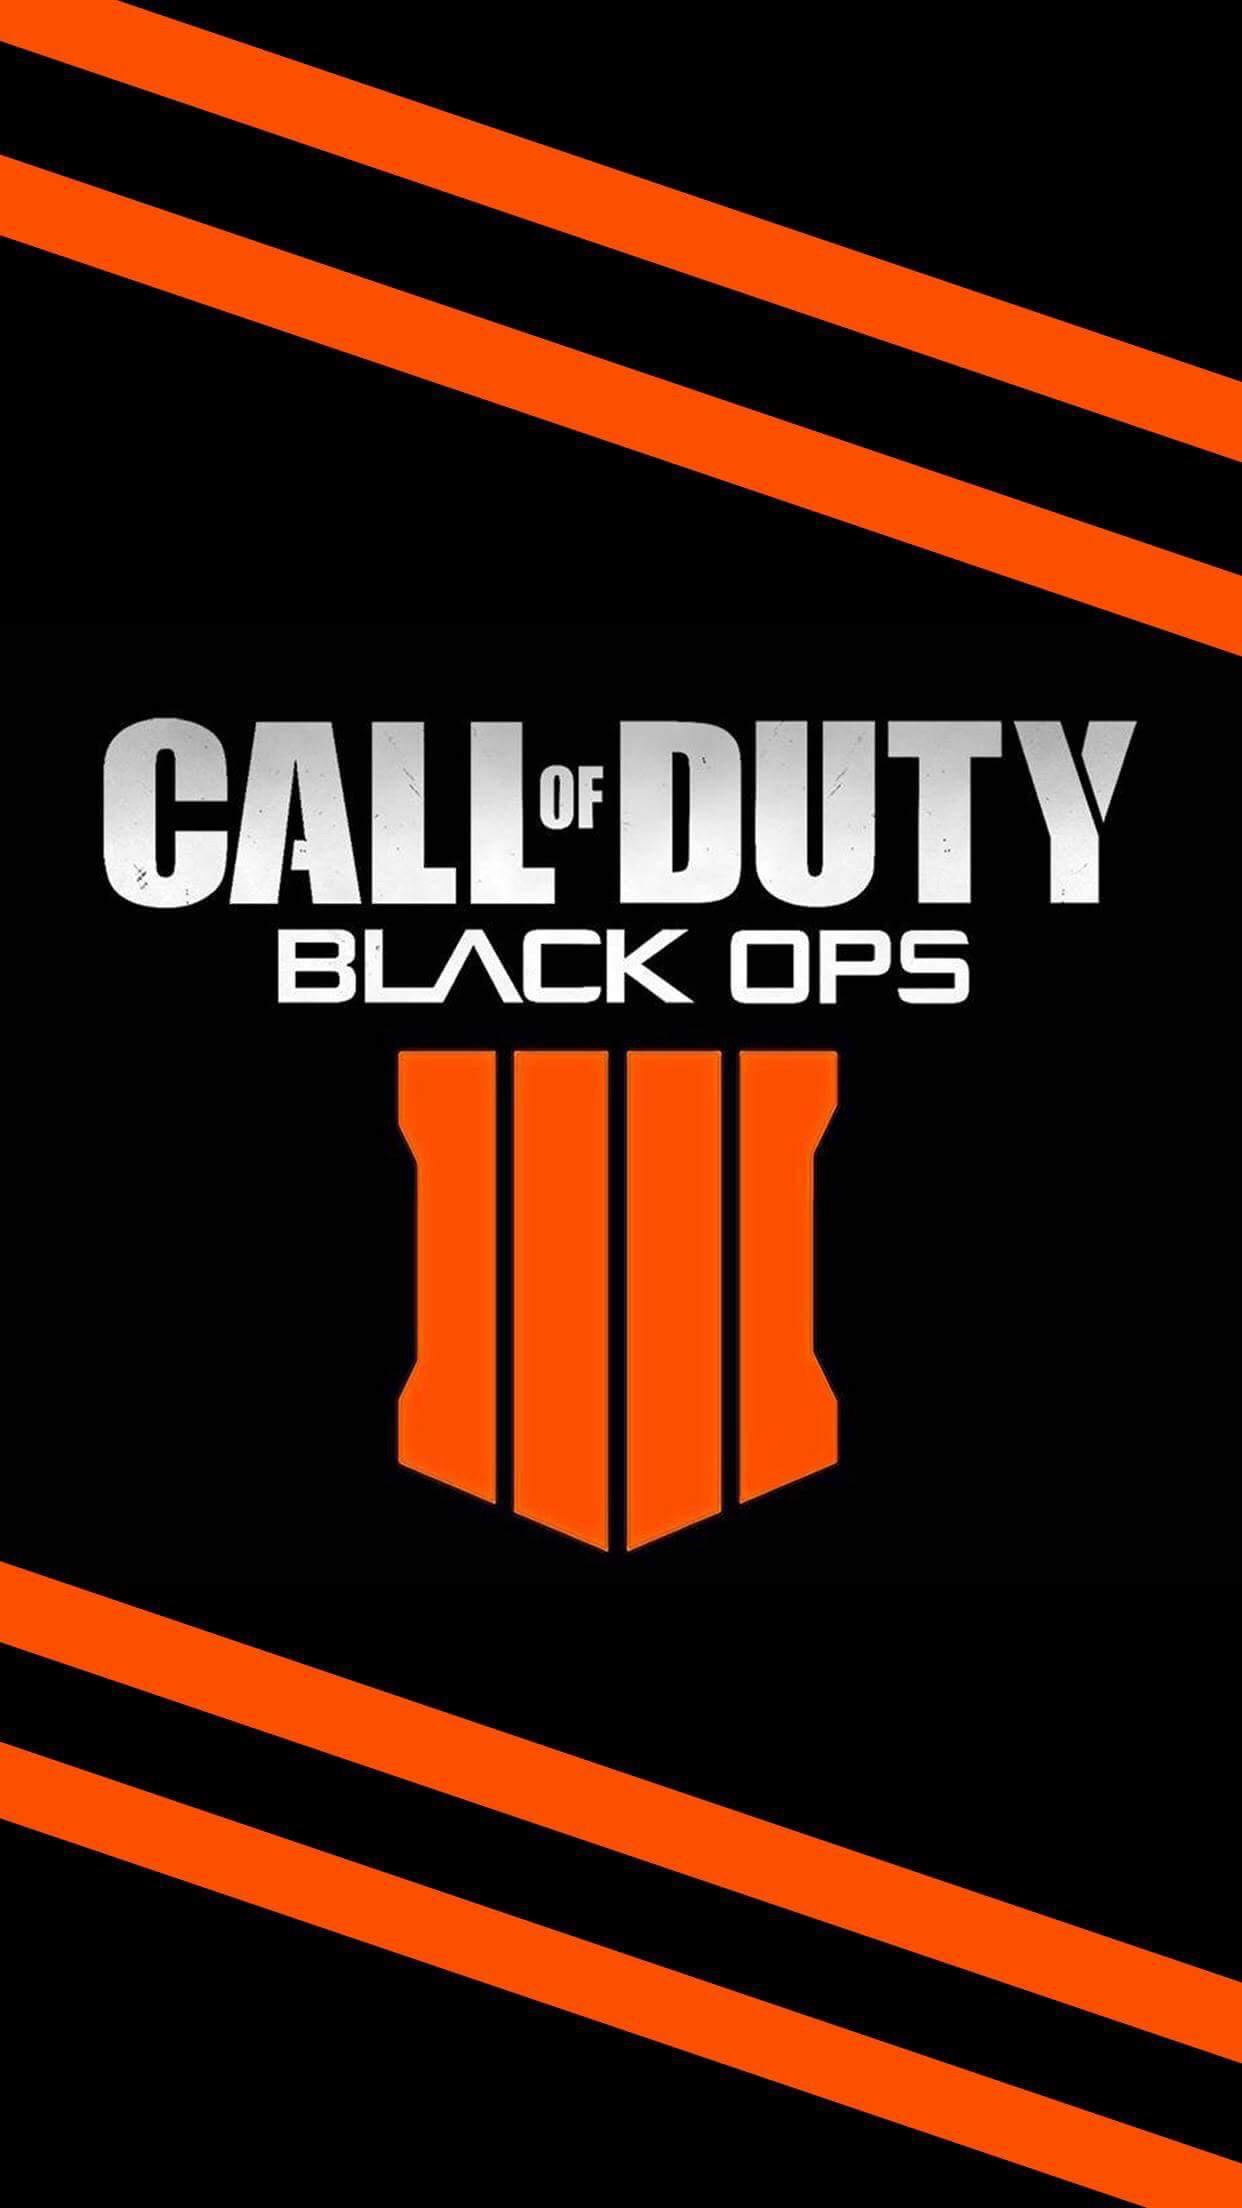 Call of Duty Black Ops 4 Wallpaper, Blackout Wallpaper